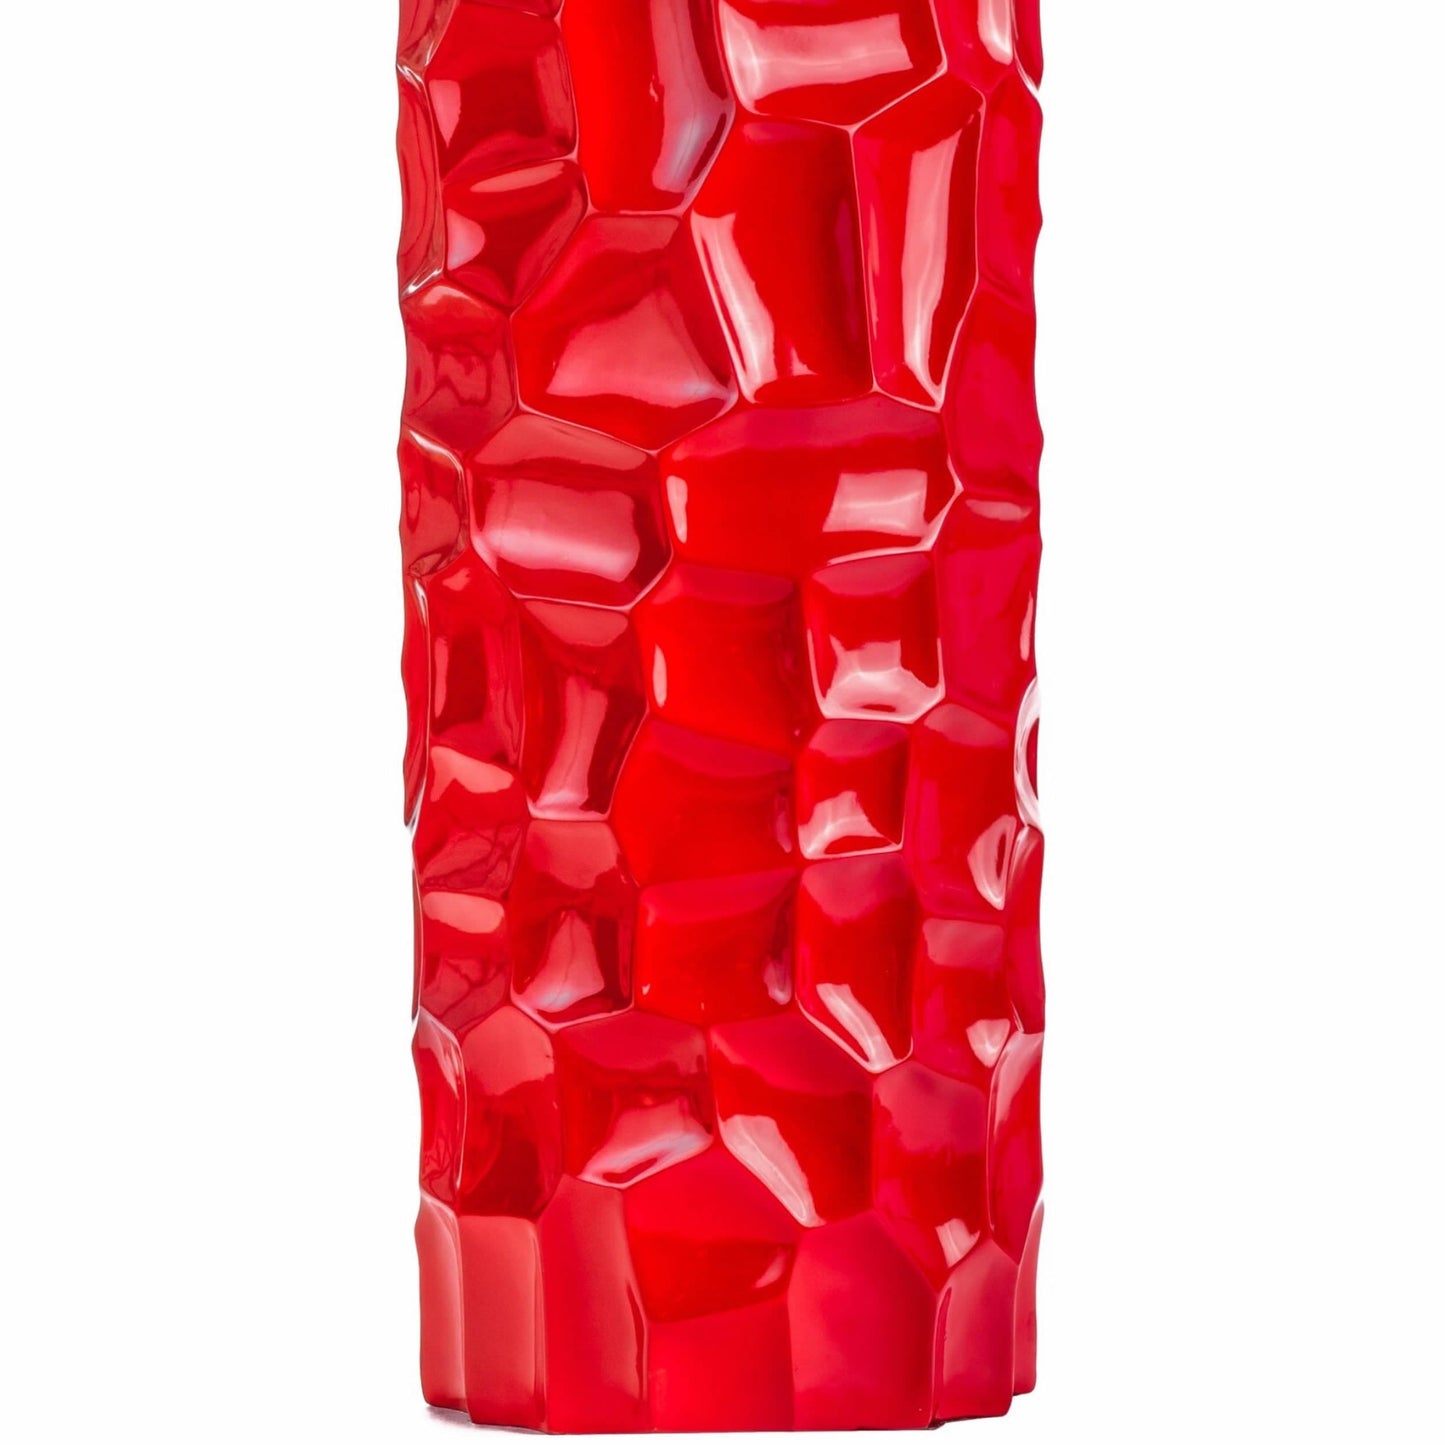 MYSTARA 52" Textured Honeycomb Vase Red